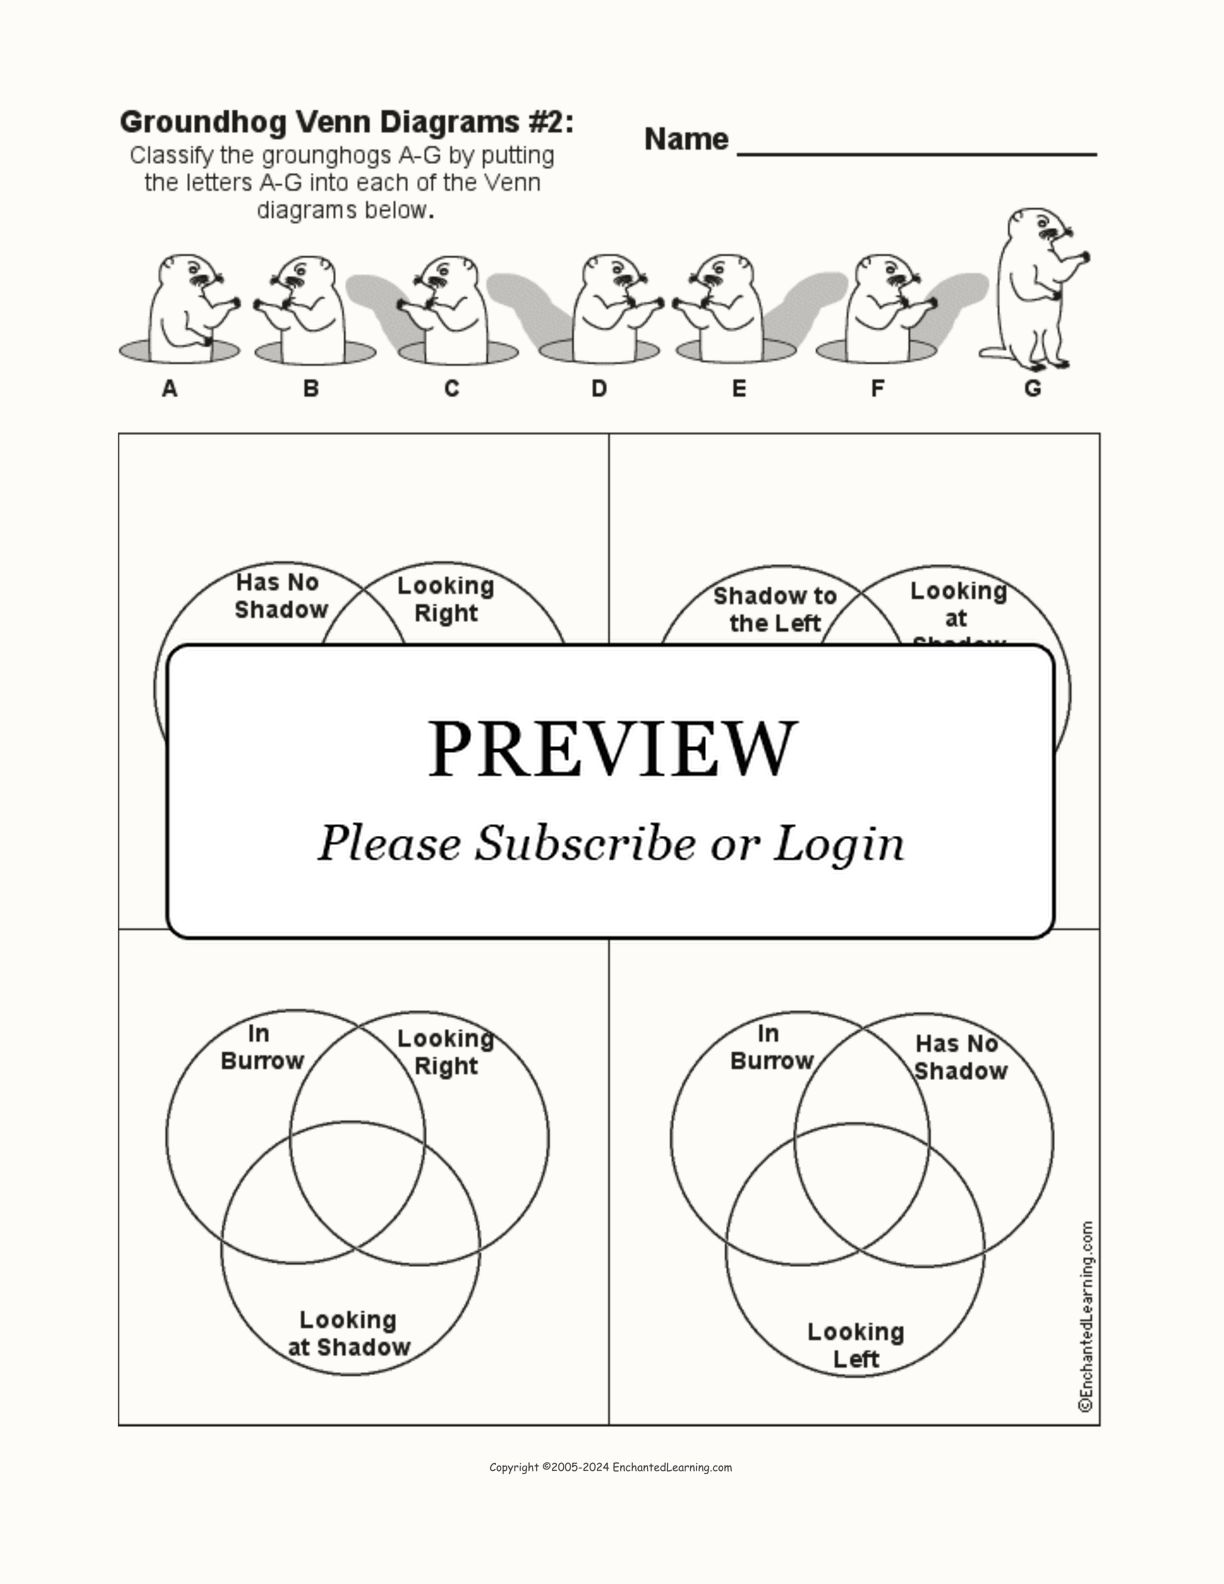 Groundhog Venn Diagrams #2 interactive worksheet page 1